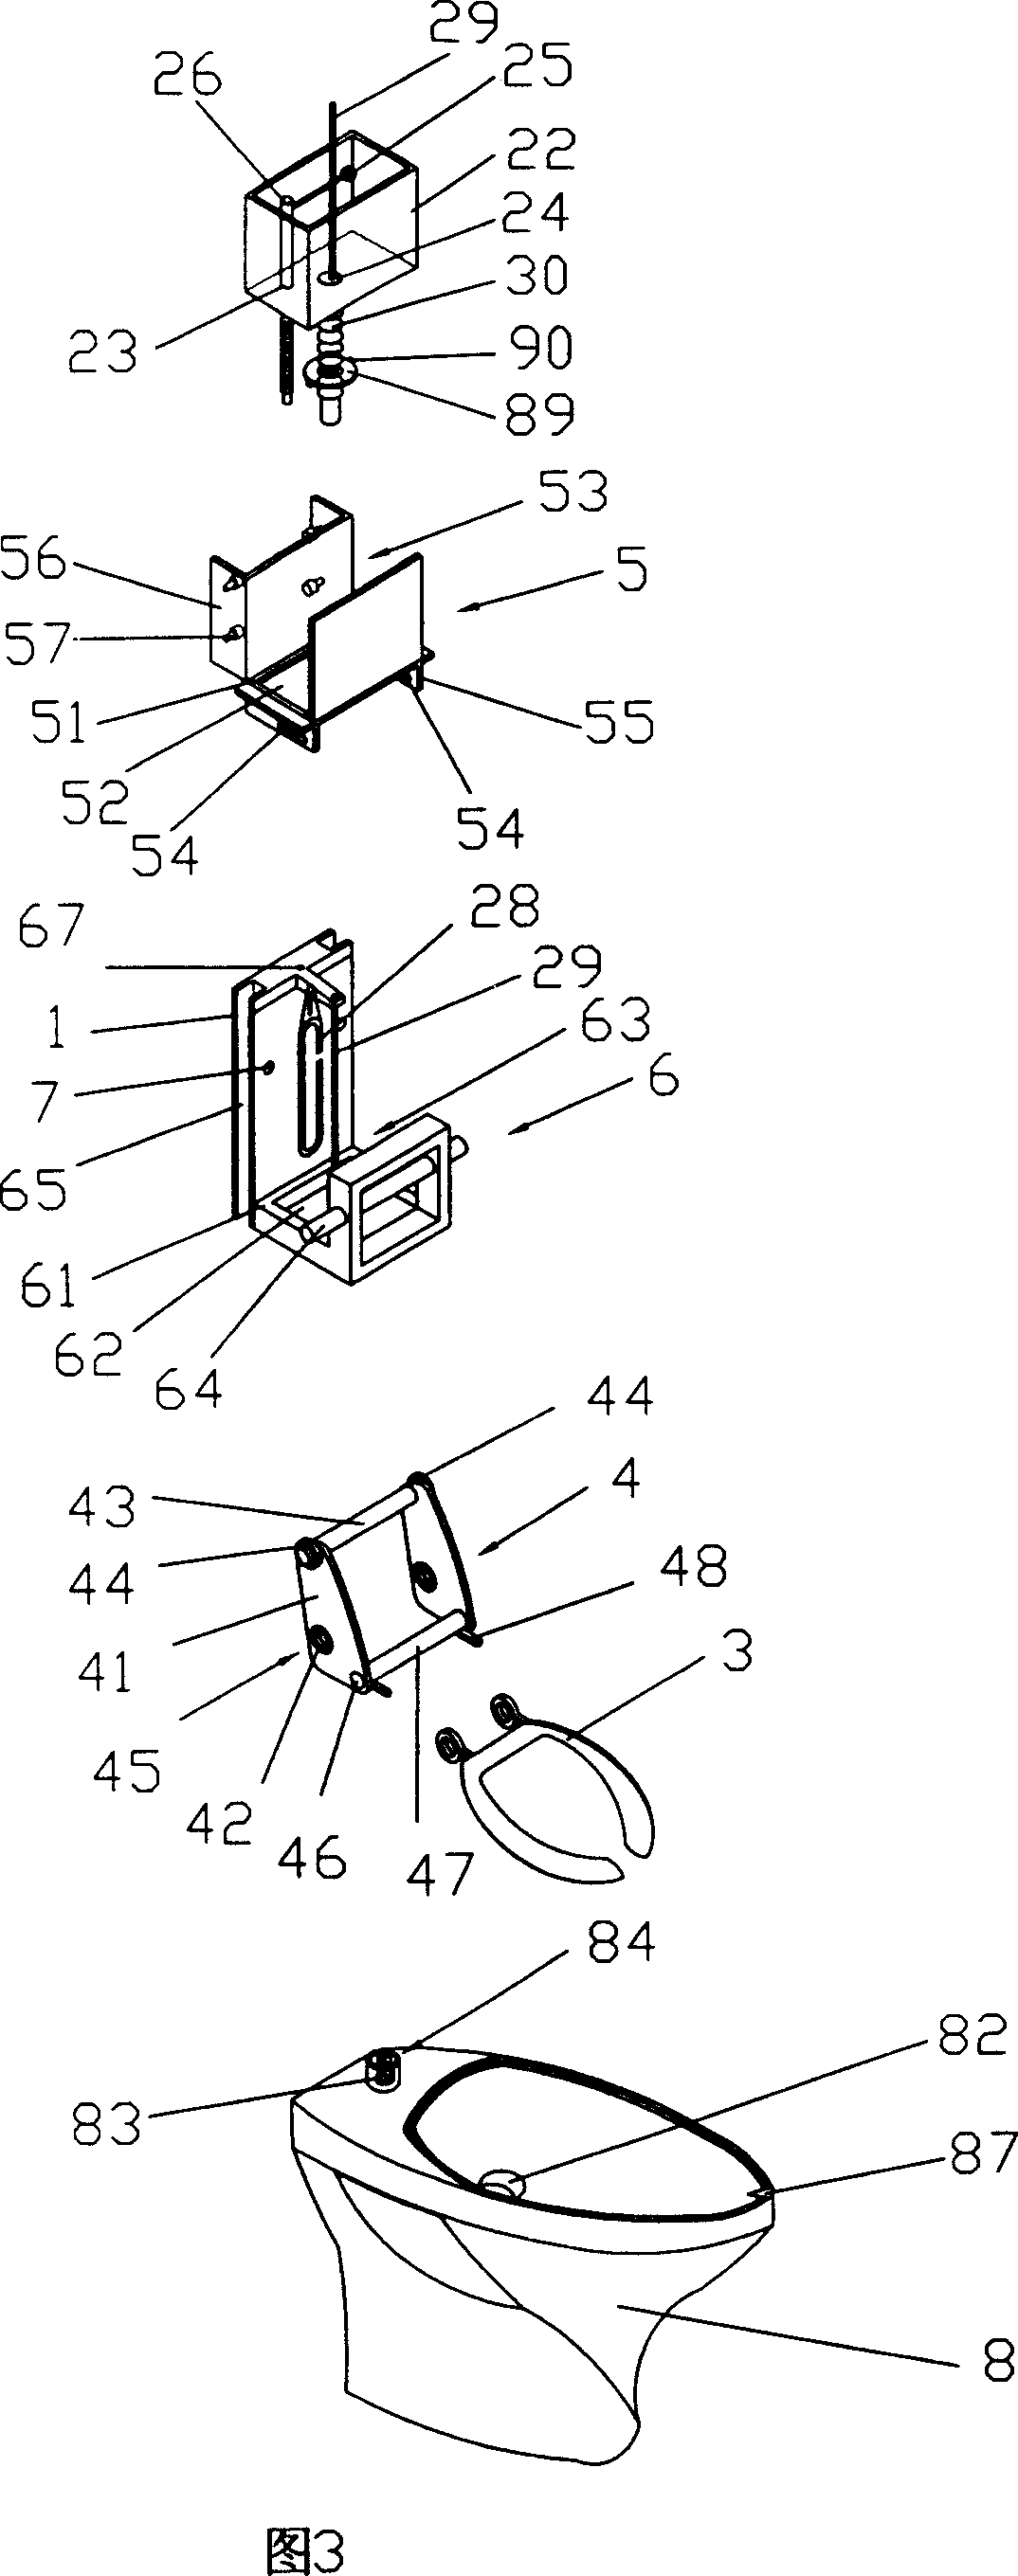 Complex functional toilet closet mechanism